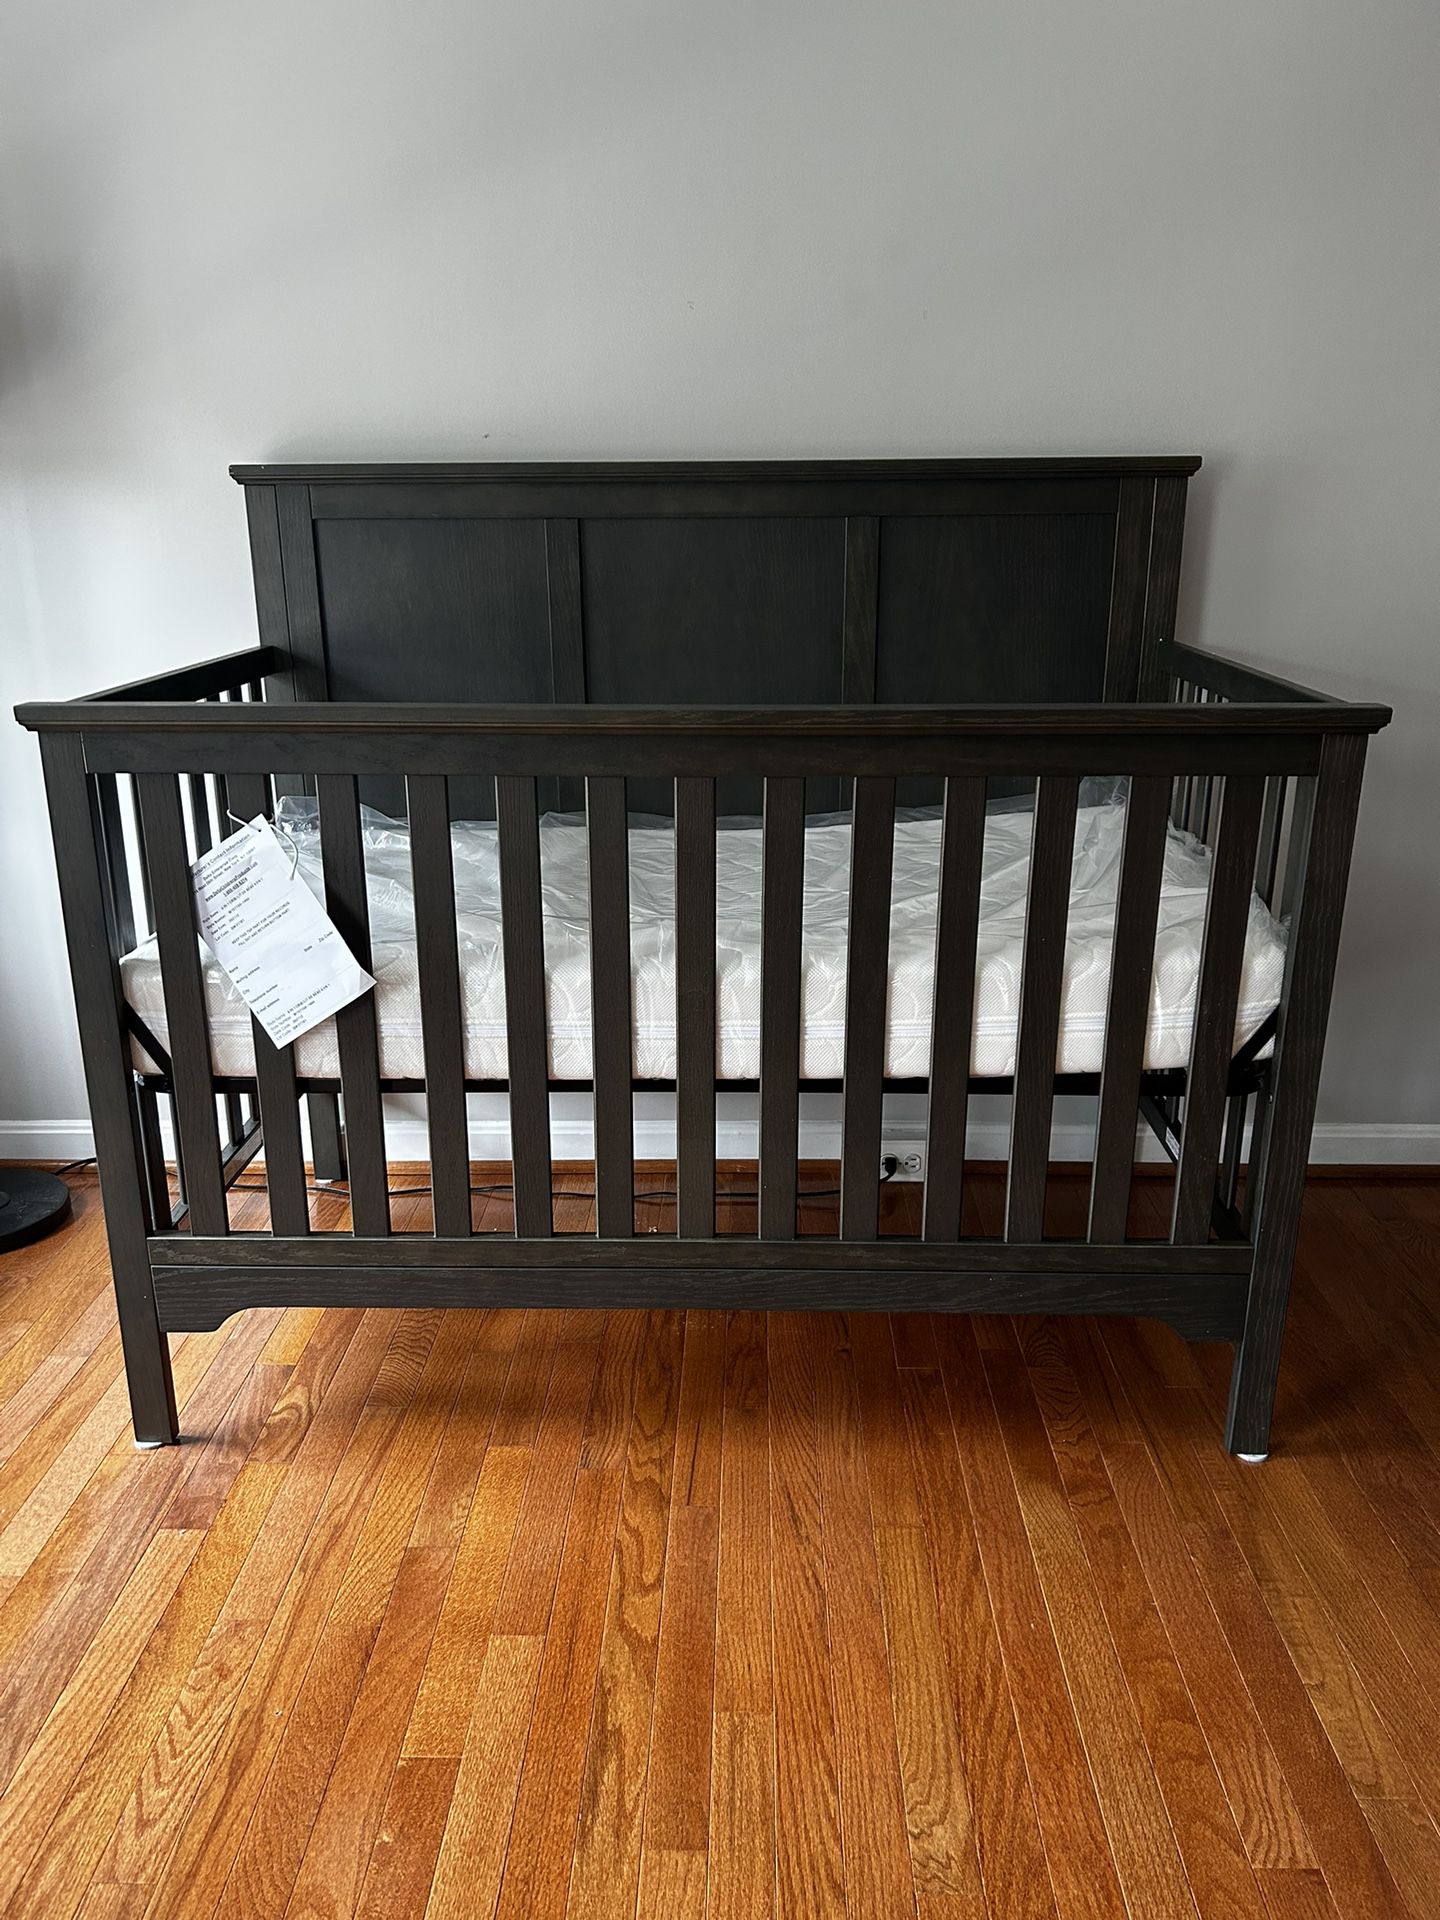 New brown Crib